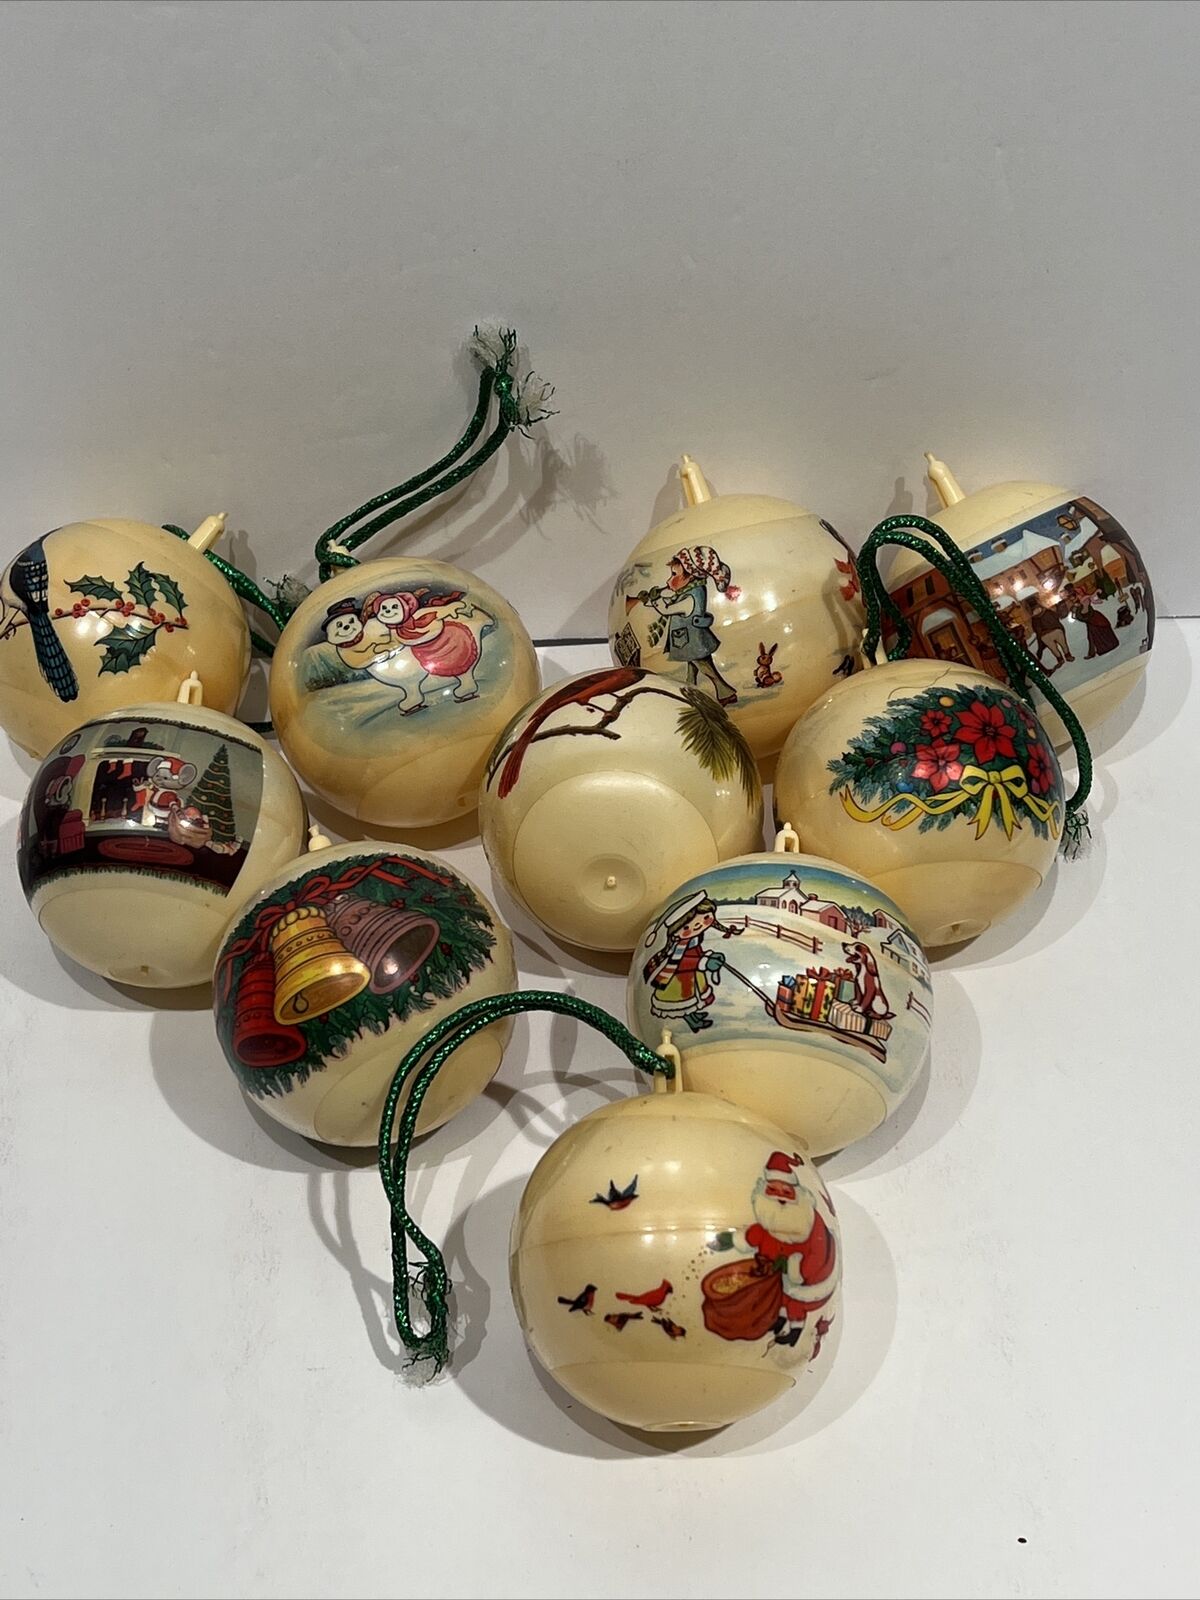 VTG lot of 10 Christmas Ornaments Mixed Christmas Scenes